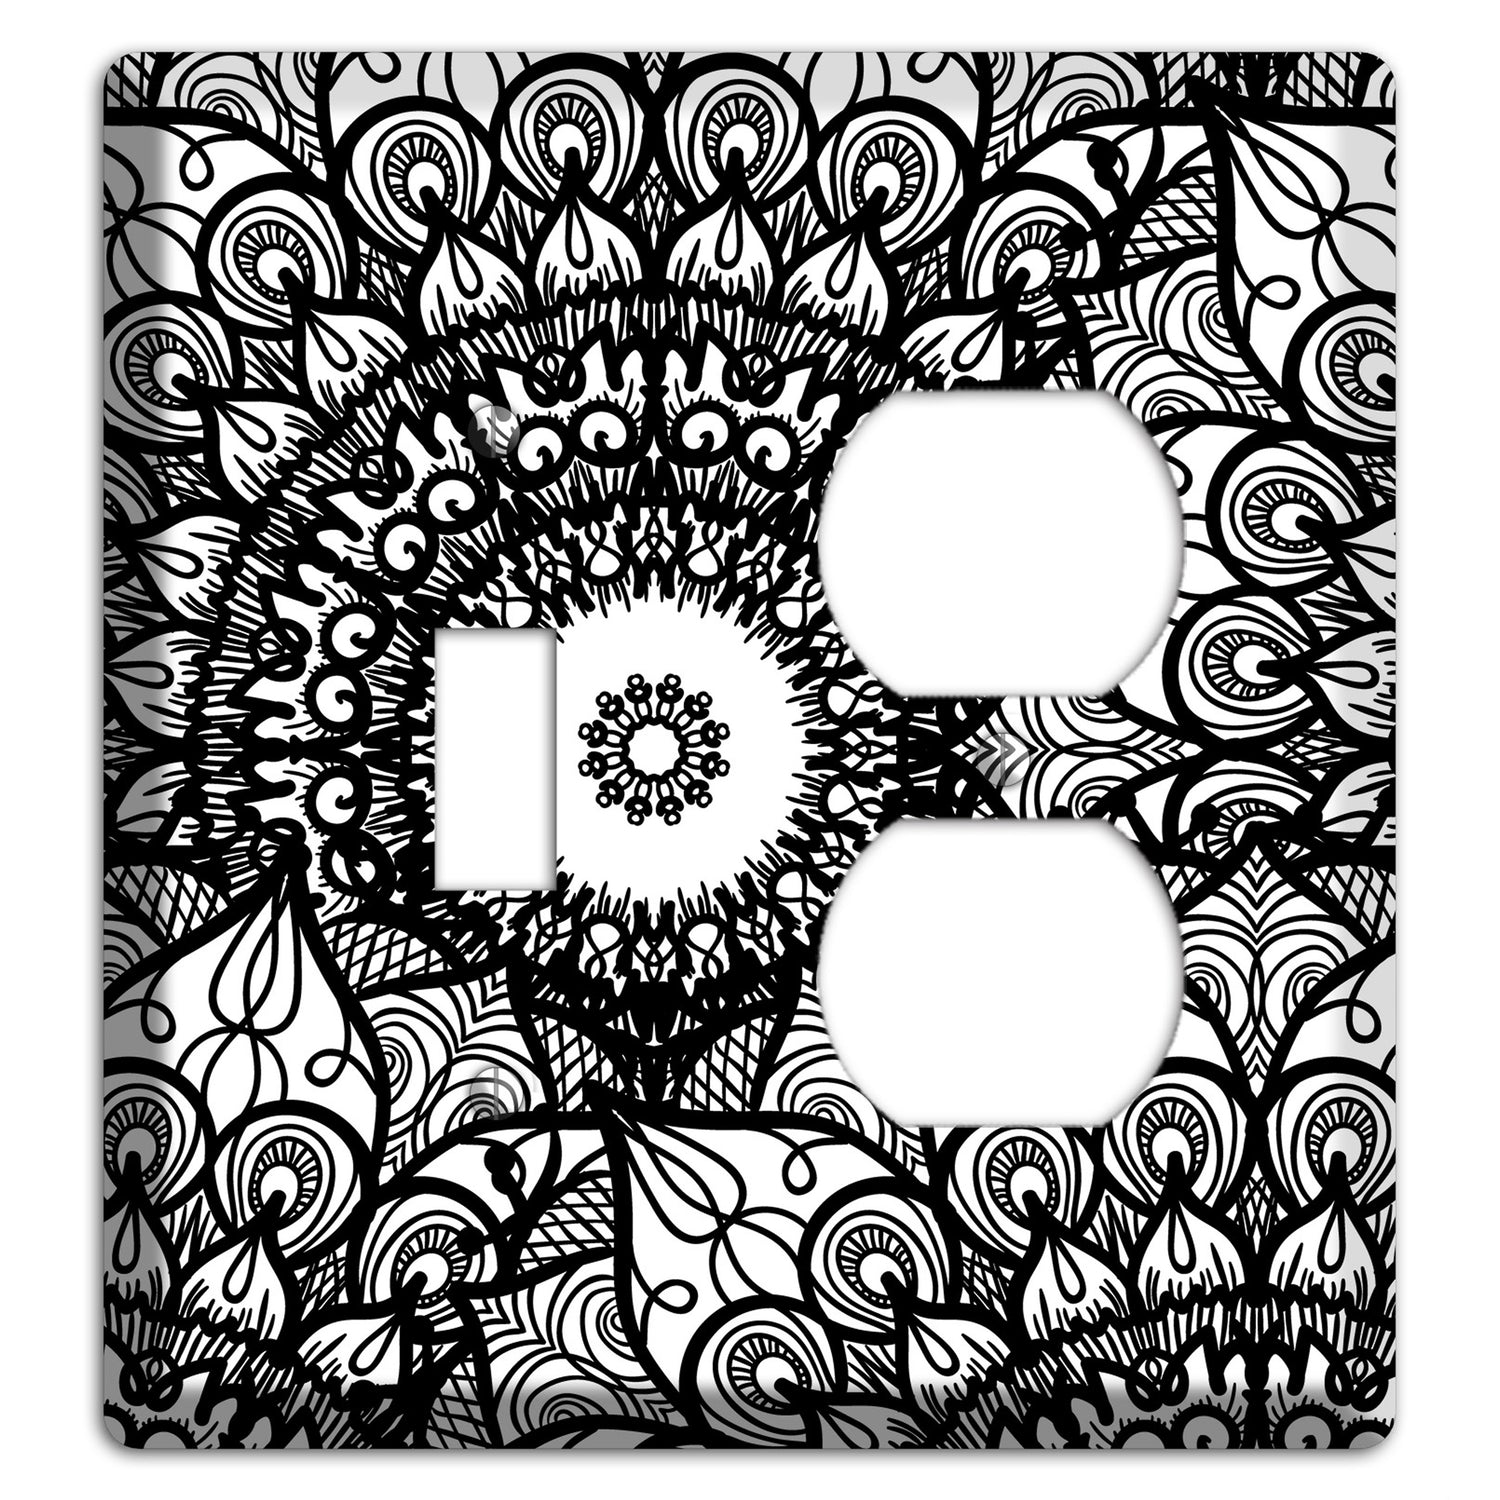 Mandala Black and White Style V Cover Plates Toggle / Duplex Wallplate